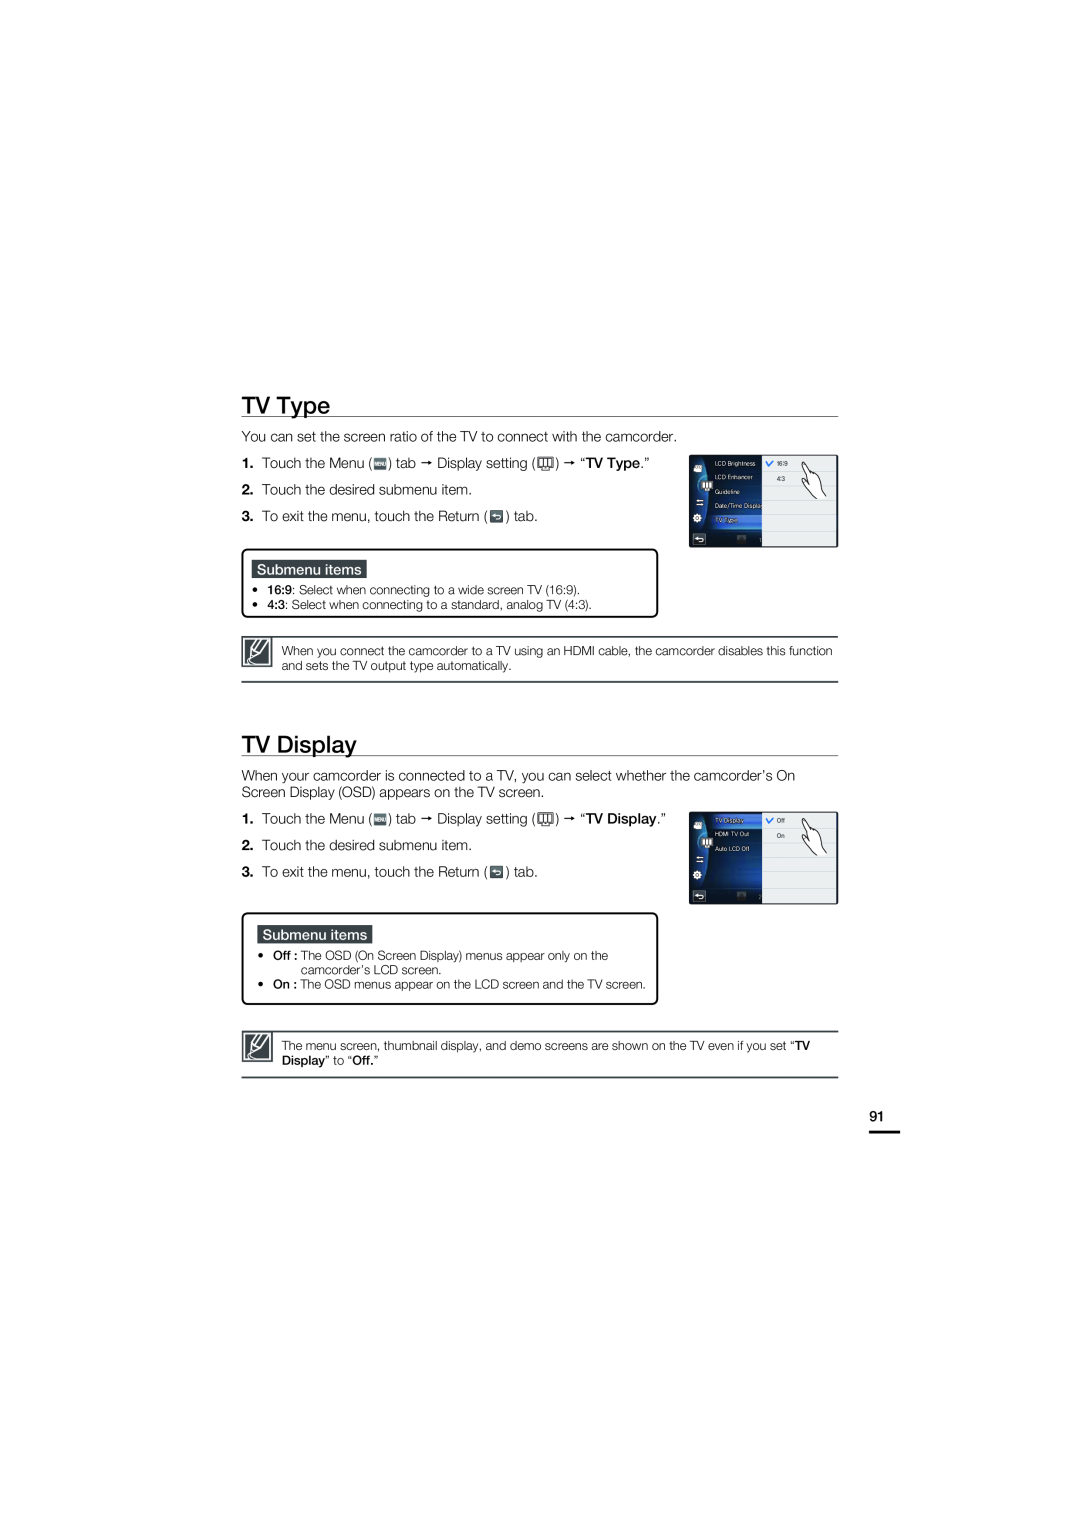 Samsung HMX-S10BN/XAA, HMX-S15BN/XAA manual TV Type, Submenu items, Touch the Menu tab Display setting “TV Display.” 